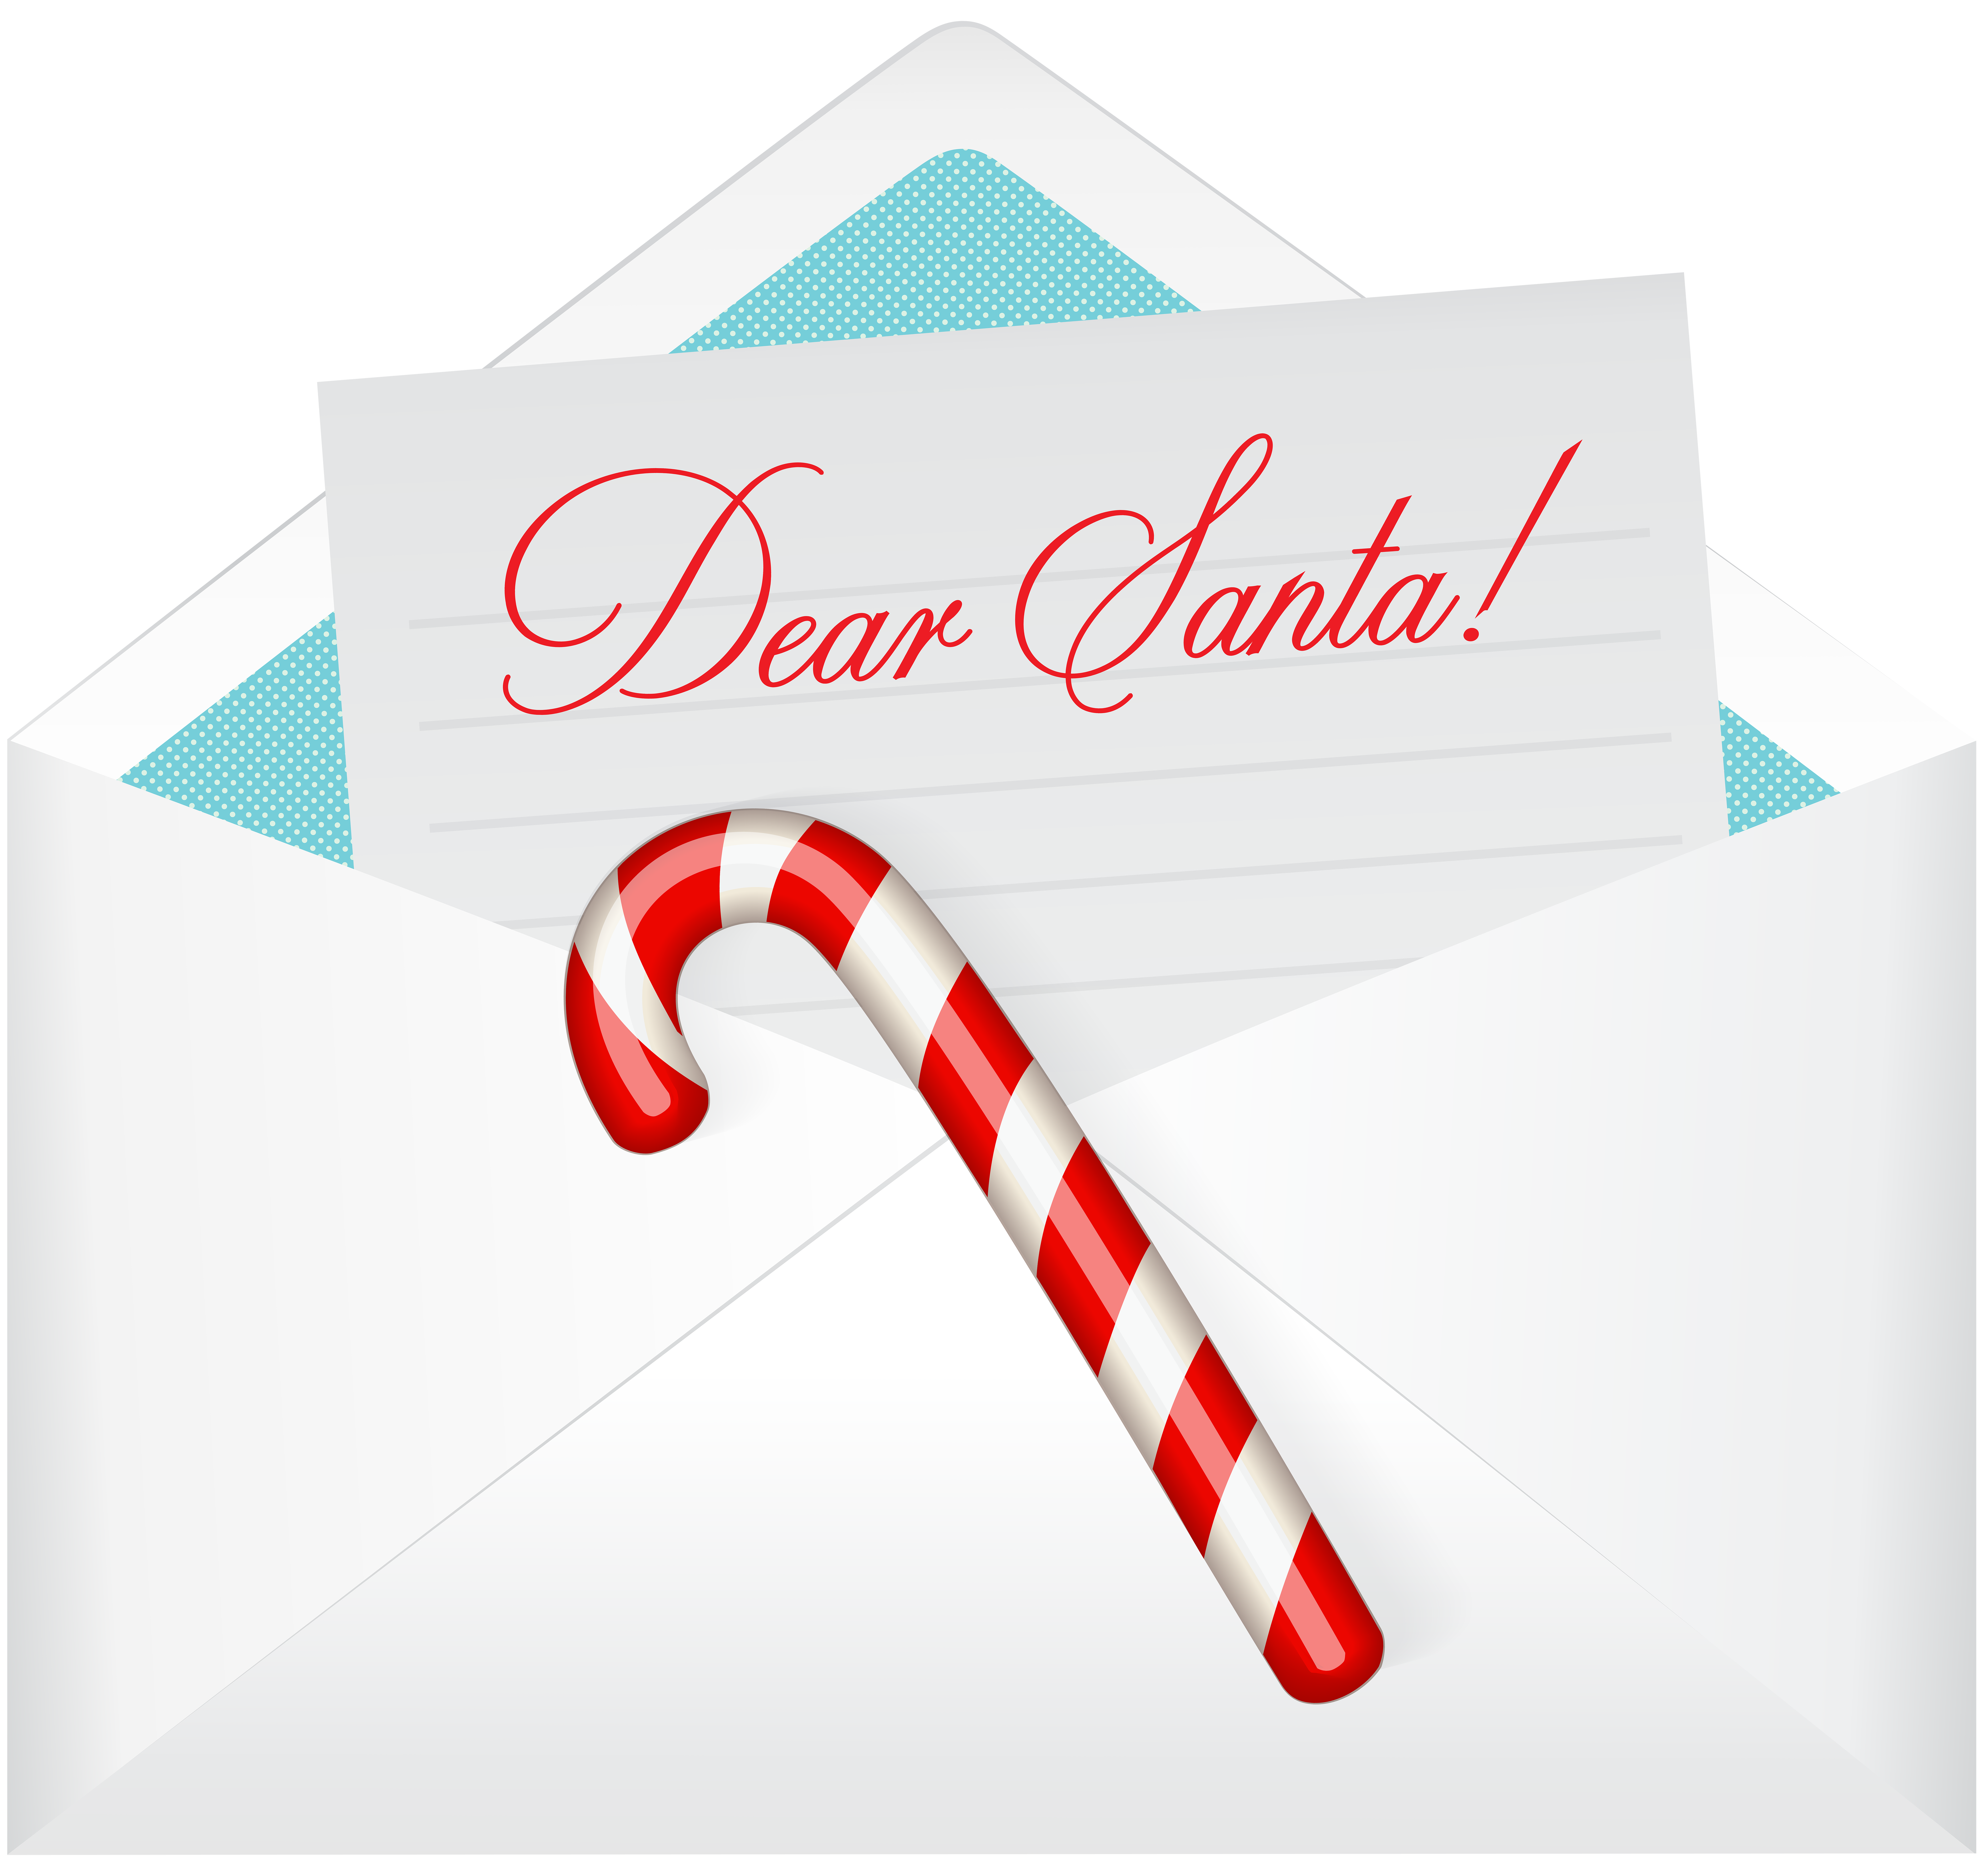 Dear Santa Letter PNG Clip Art Image.